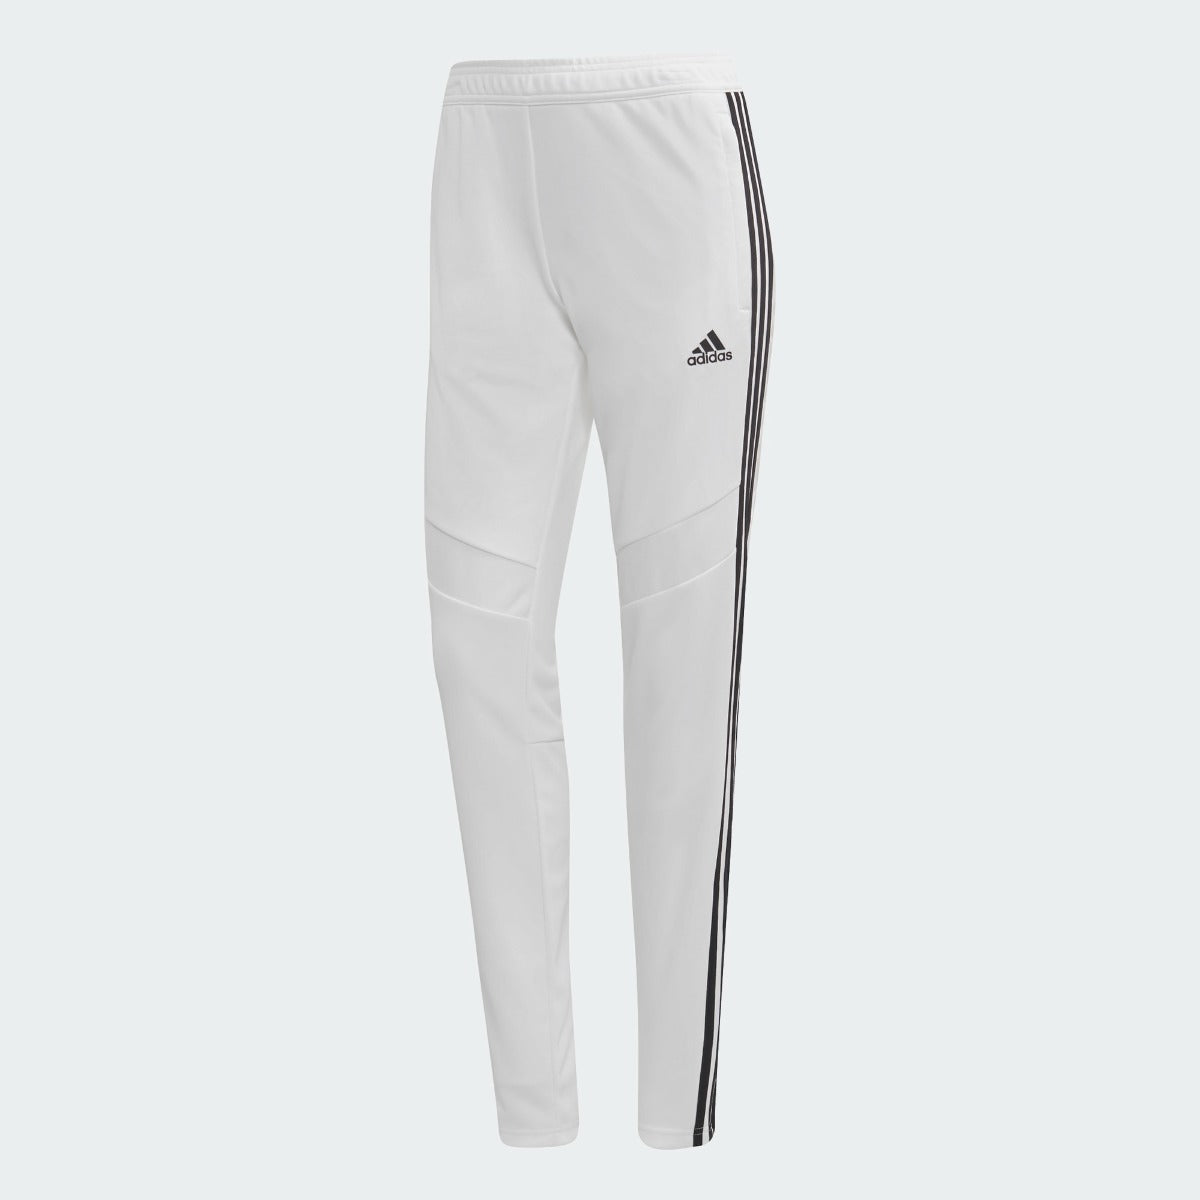 Adidas Tiro 19 Women Pants - White-Black